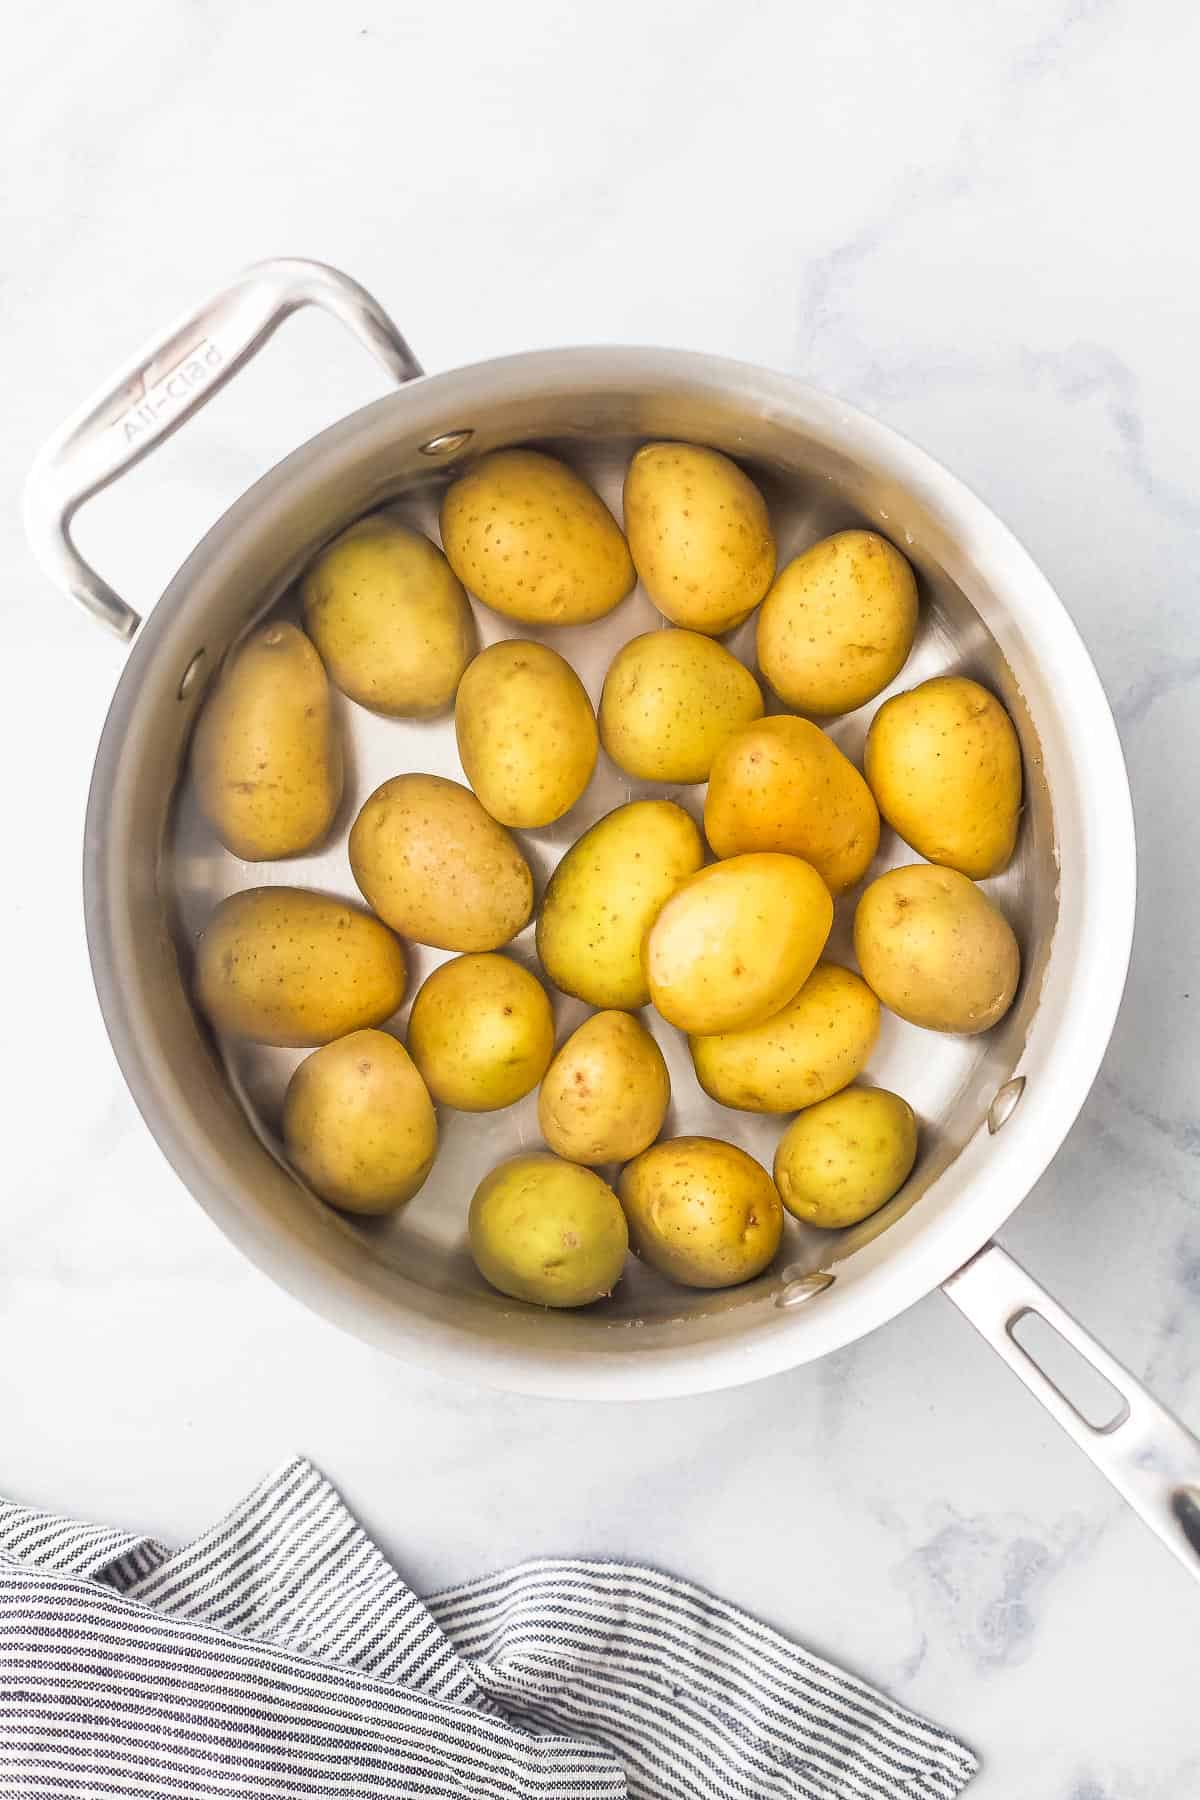 Mini potatoes being boiled in a large metal saucepan